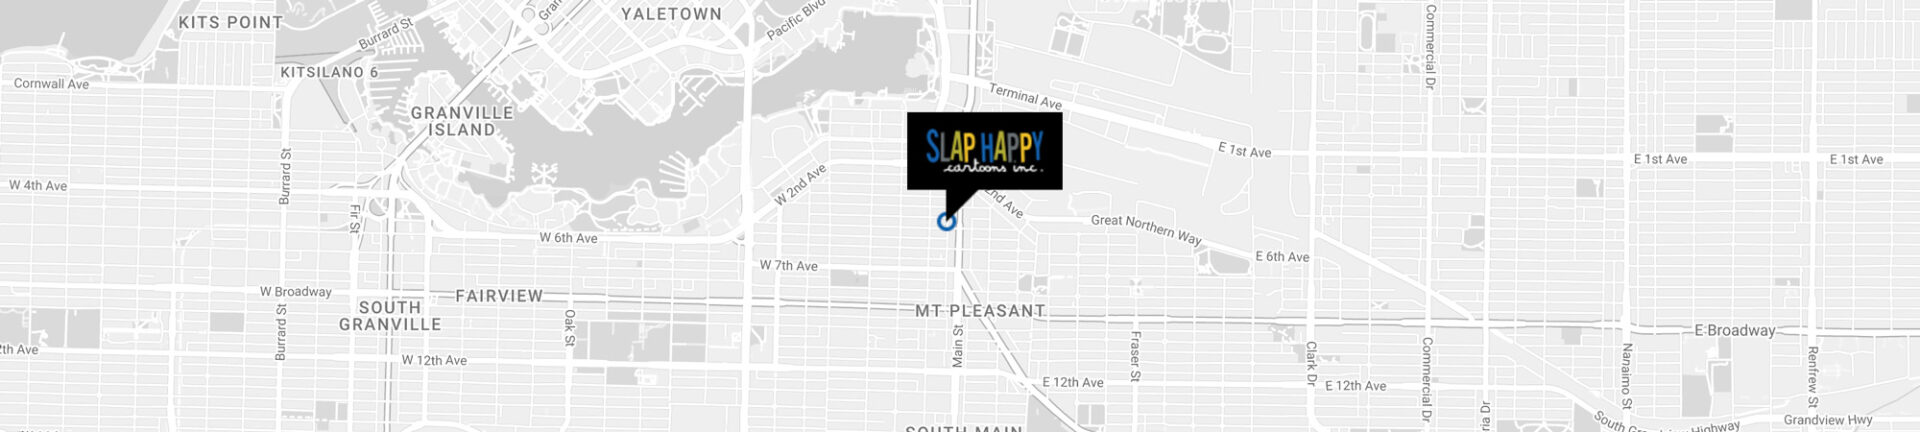 Slap Happy Cartoons Location Map Image